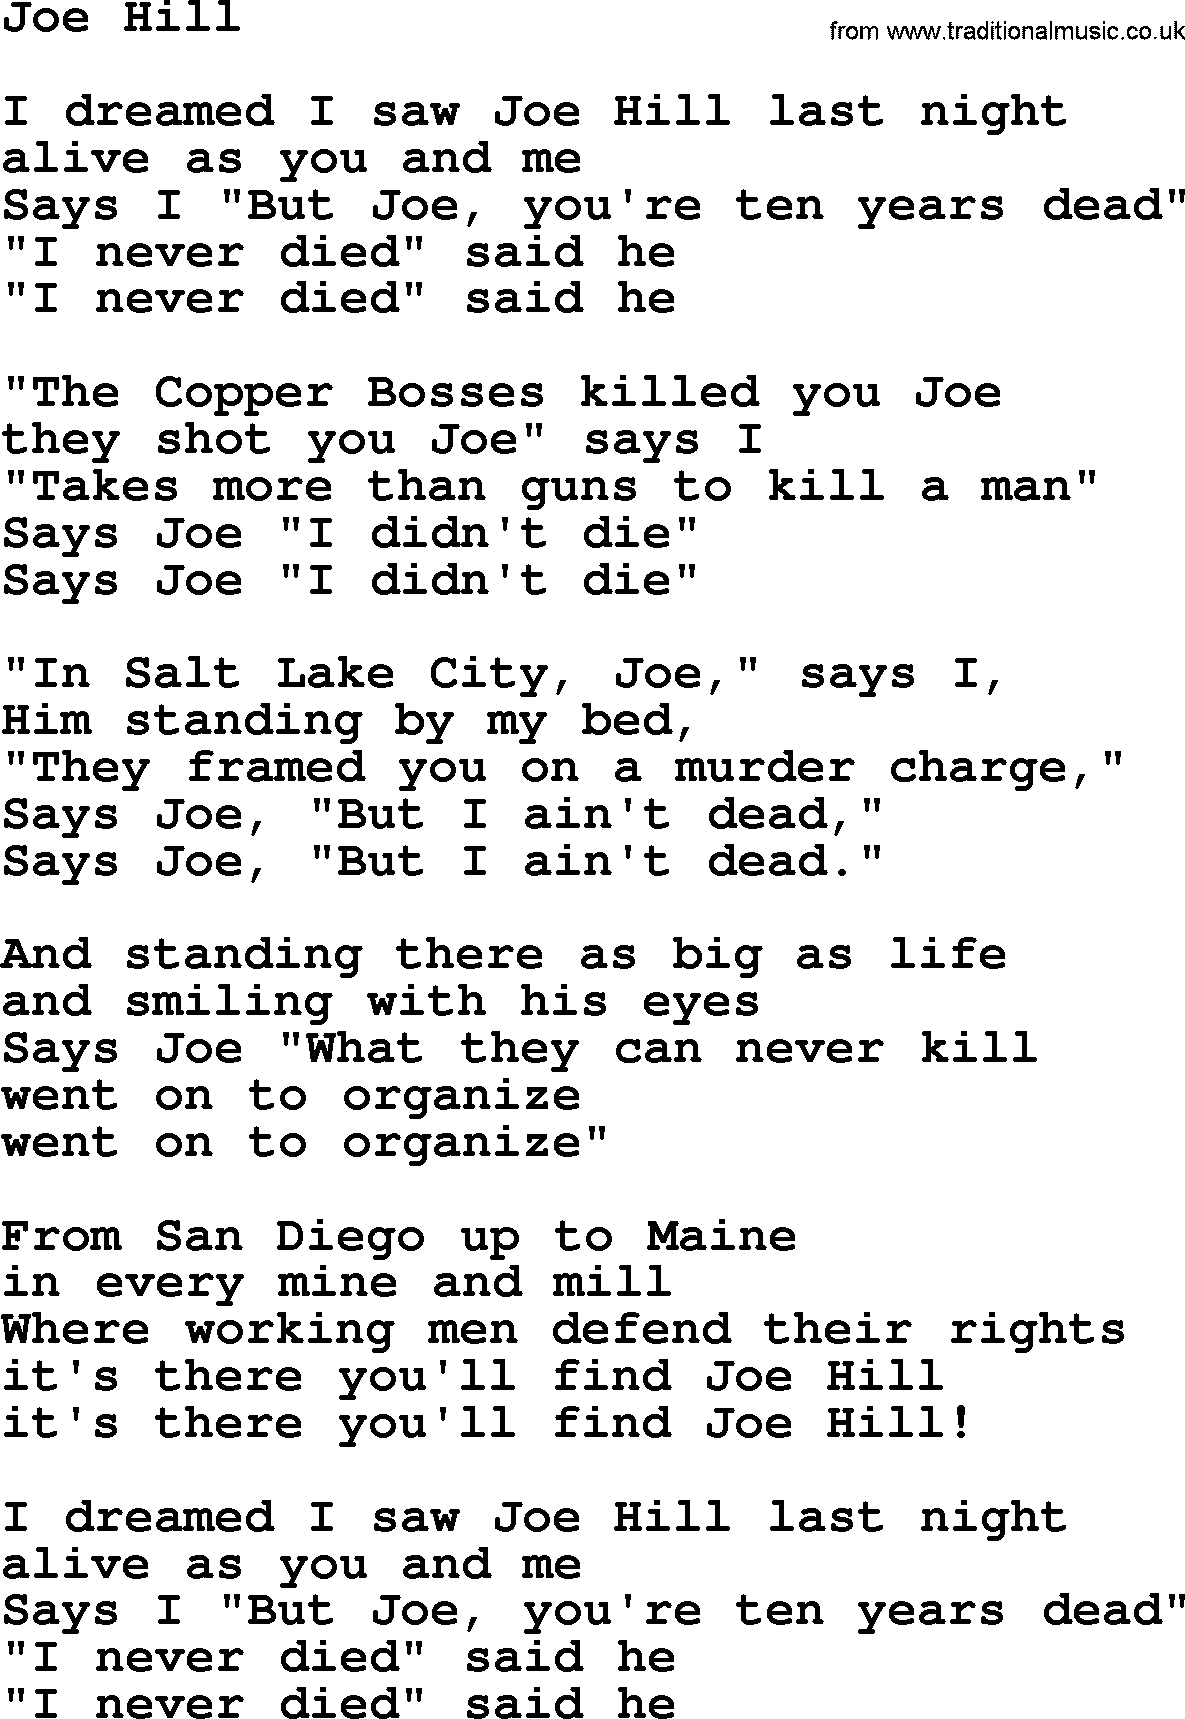 The Byrds song Joe Hill, lyrics